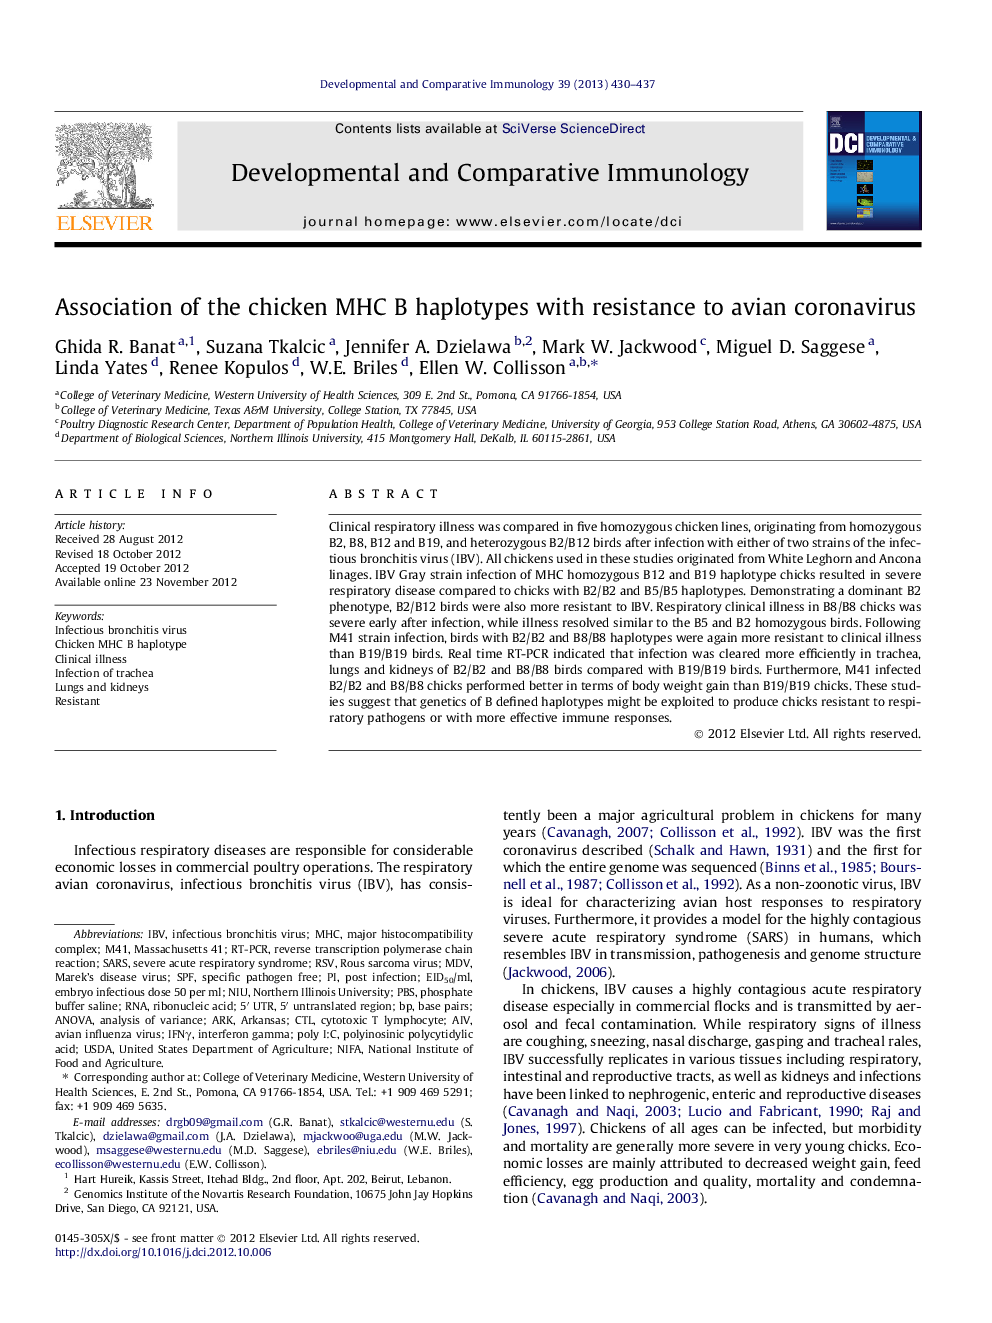 Association of the chicken MHC B haplotypes with resistance to avian coronavirus